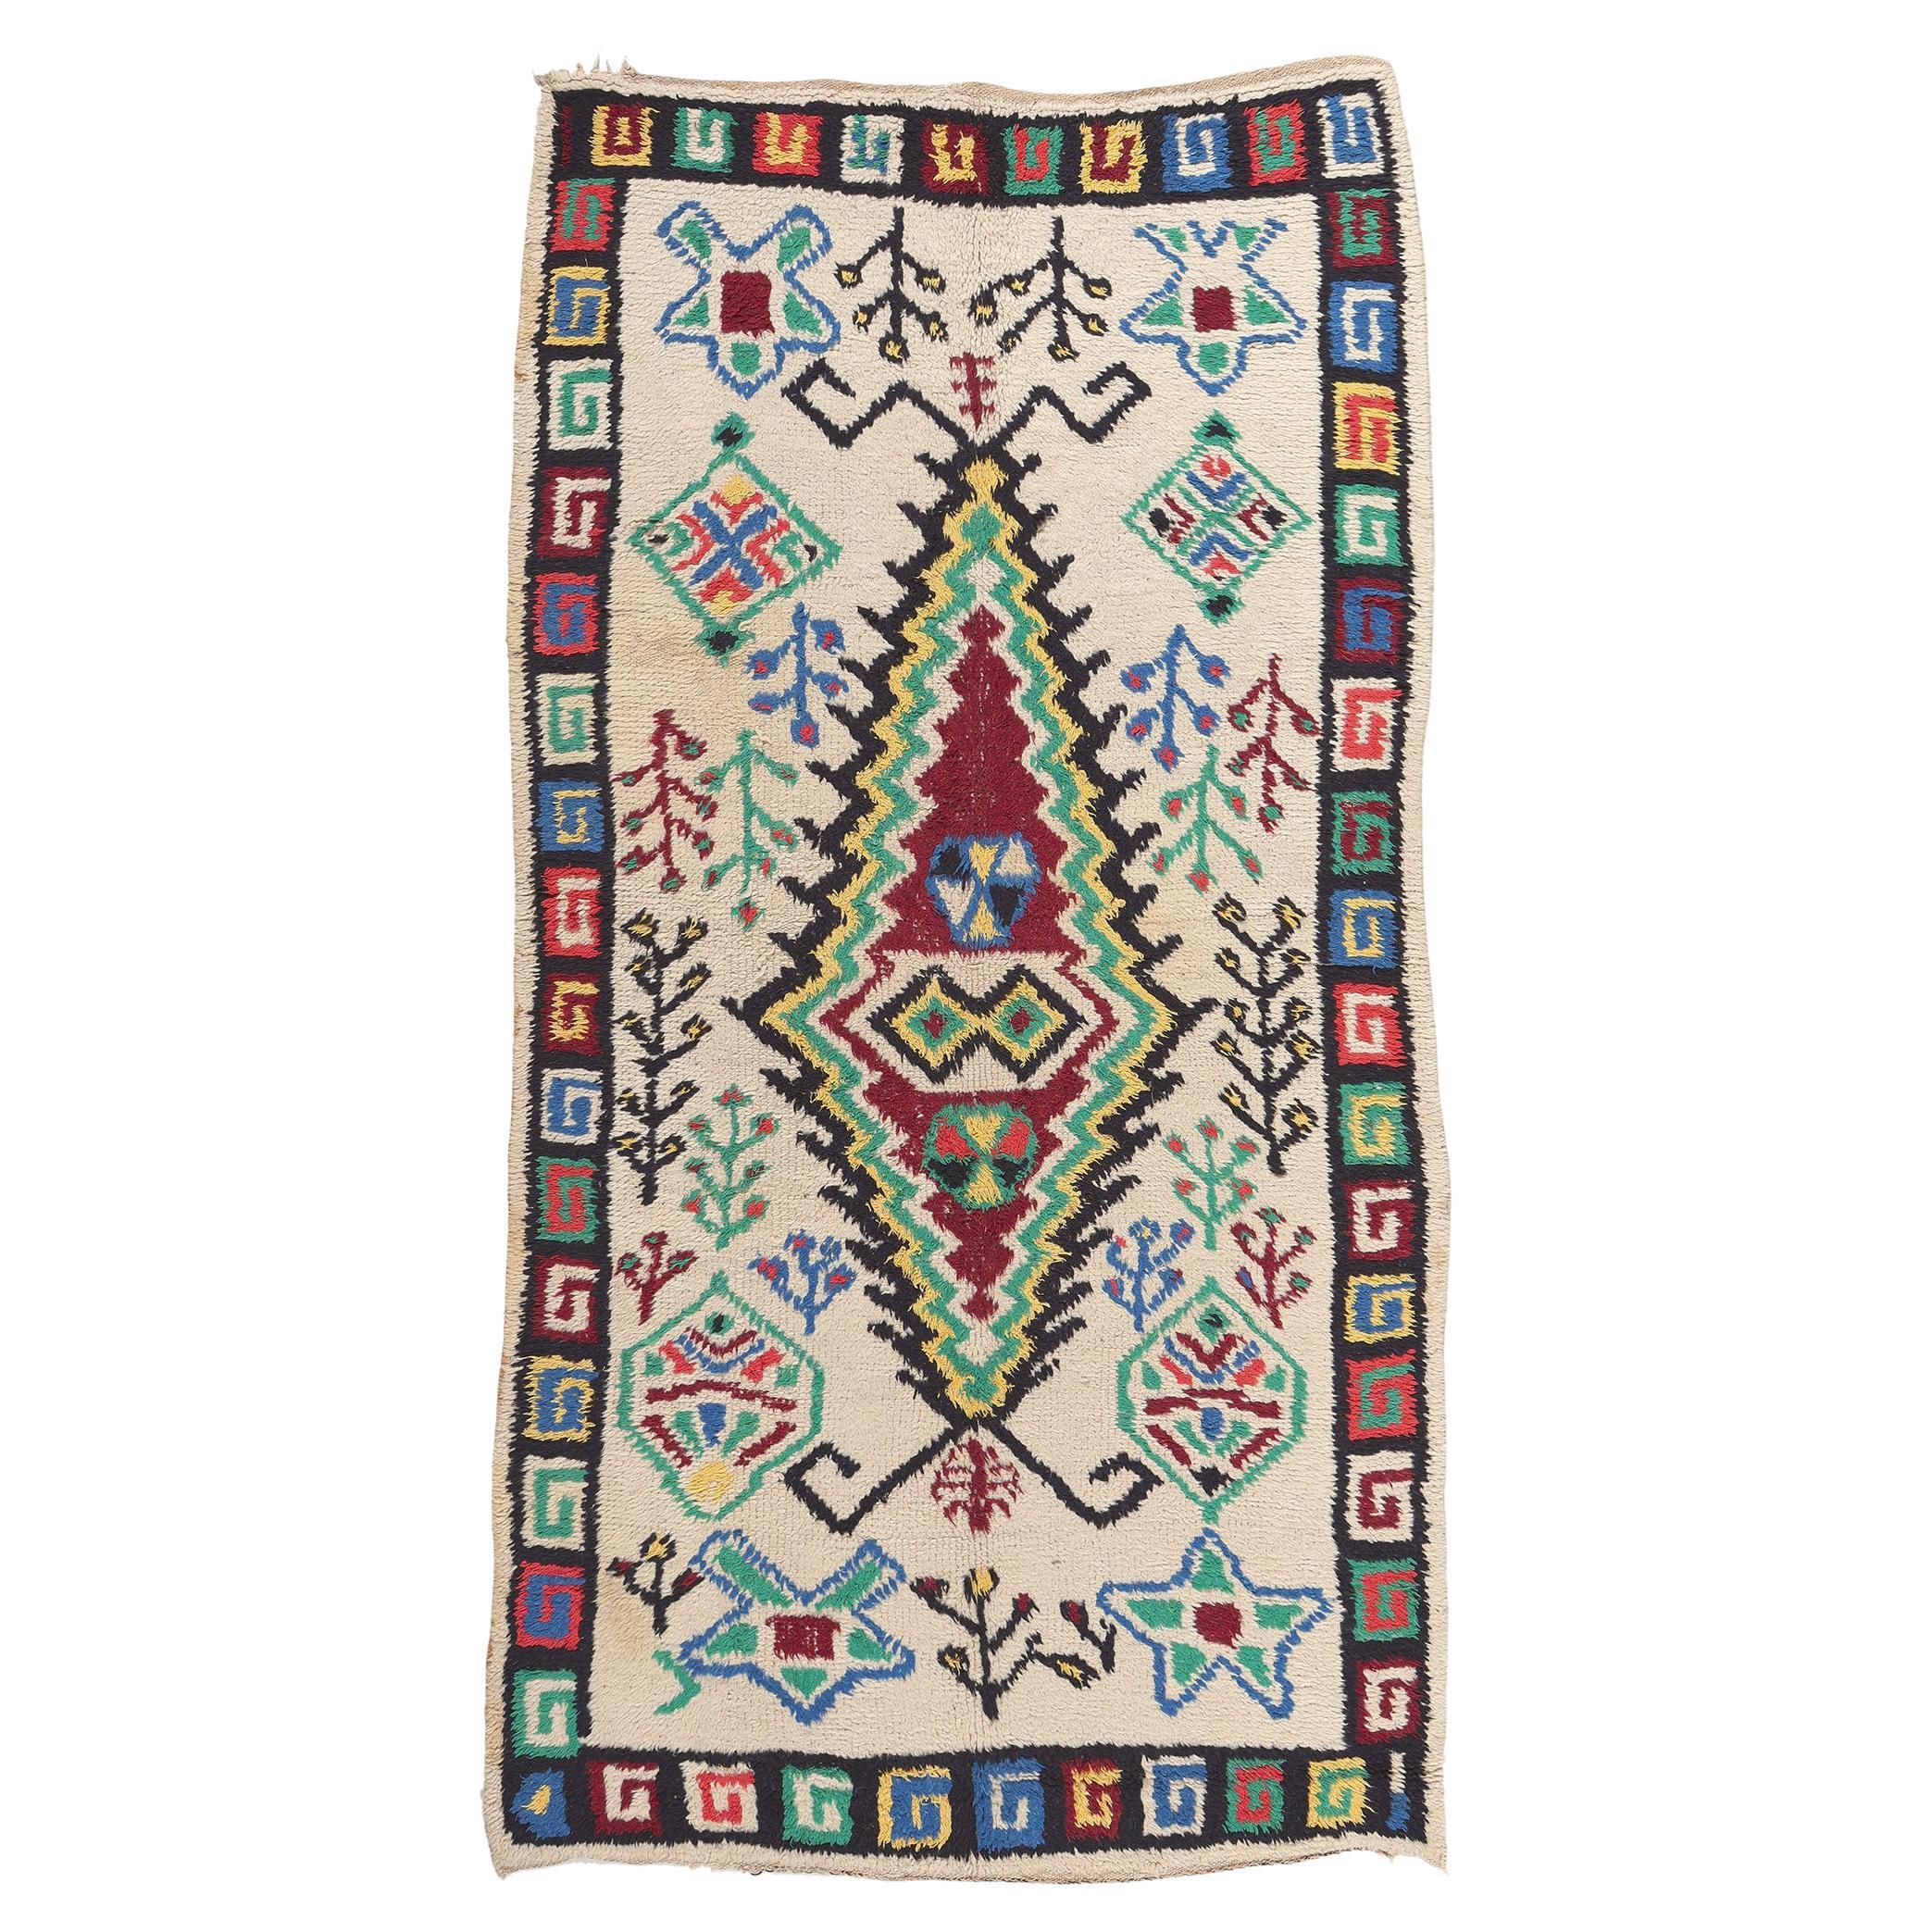 Colorful Vintage Moroccan Azilal Rug, Tribal Enchantment Meets Cozy Boho Chic